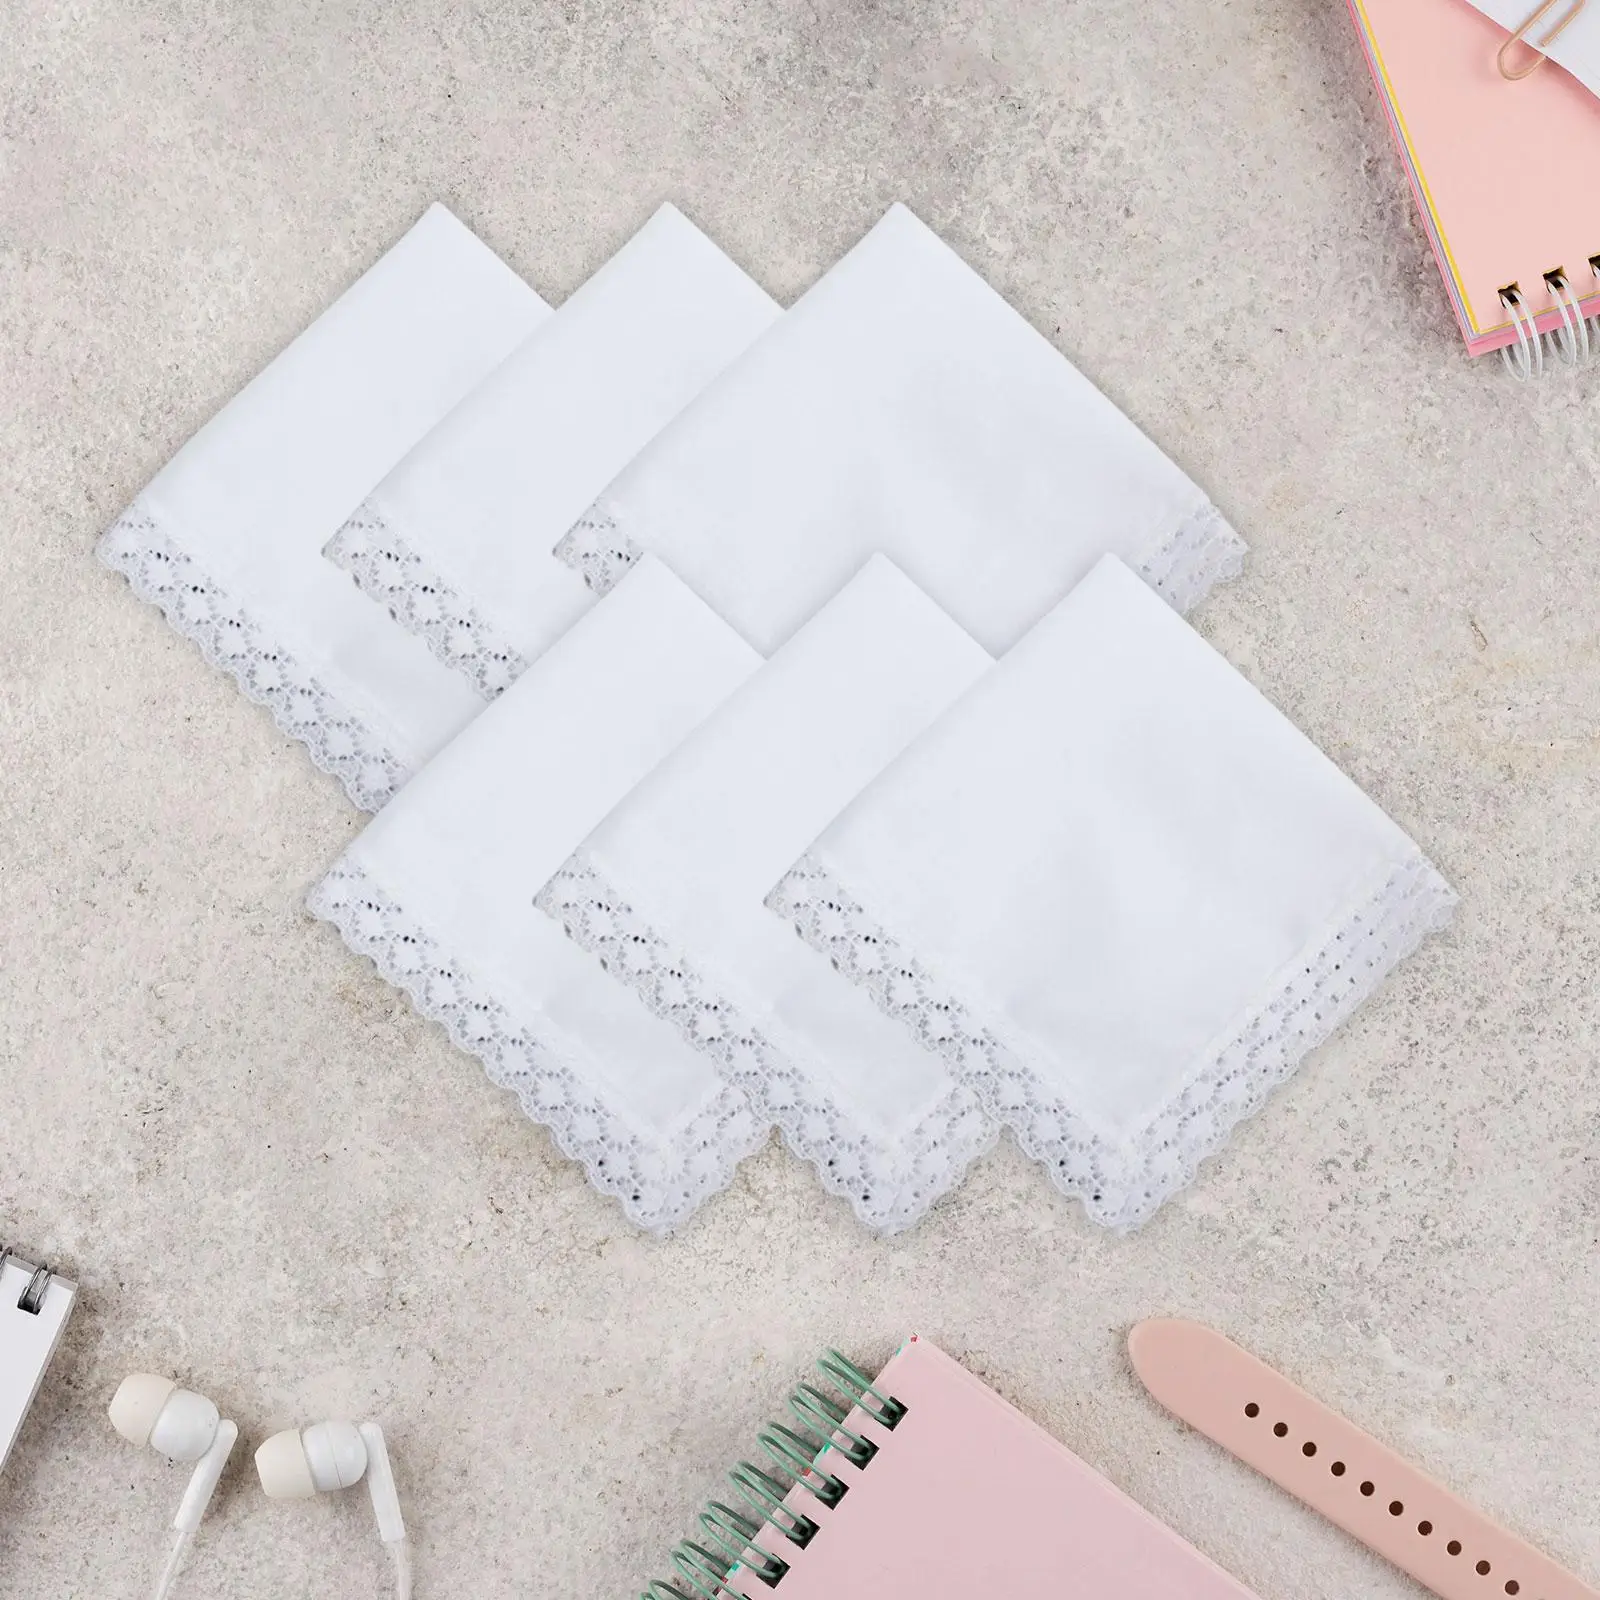 6Pcs White Lace Handkerchiefs for Men Suit Cotton Ladies Womens Pocket Squares for Dyeing Crafts Supplies Wedding Handmade DIY